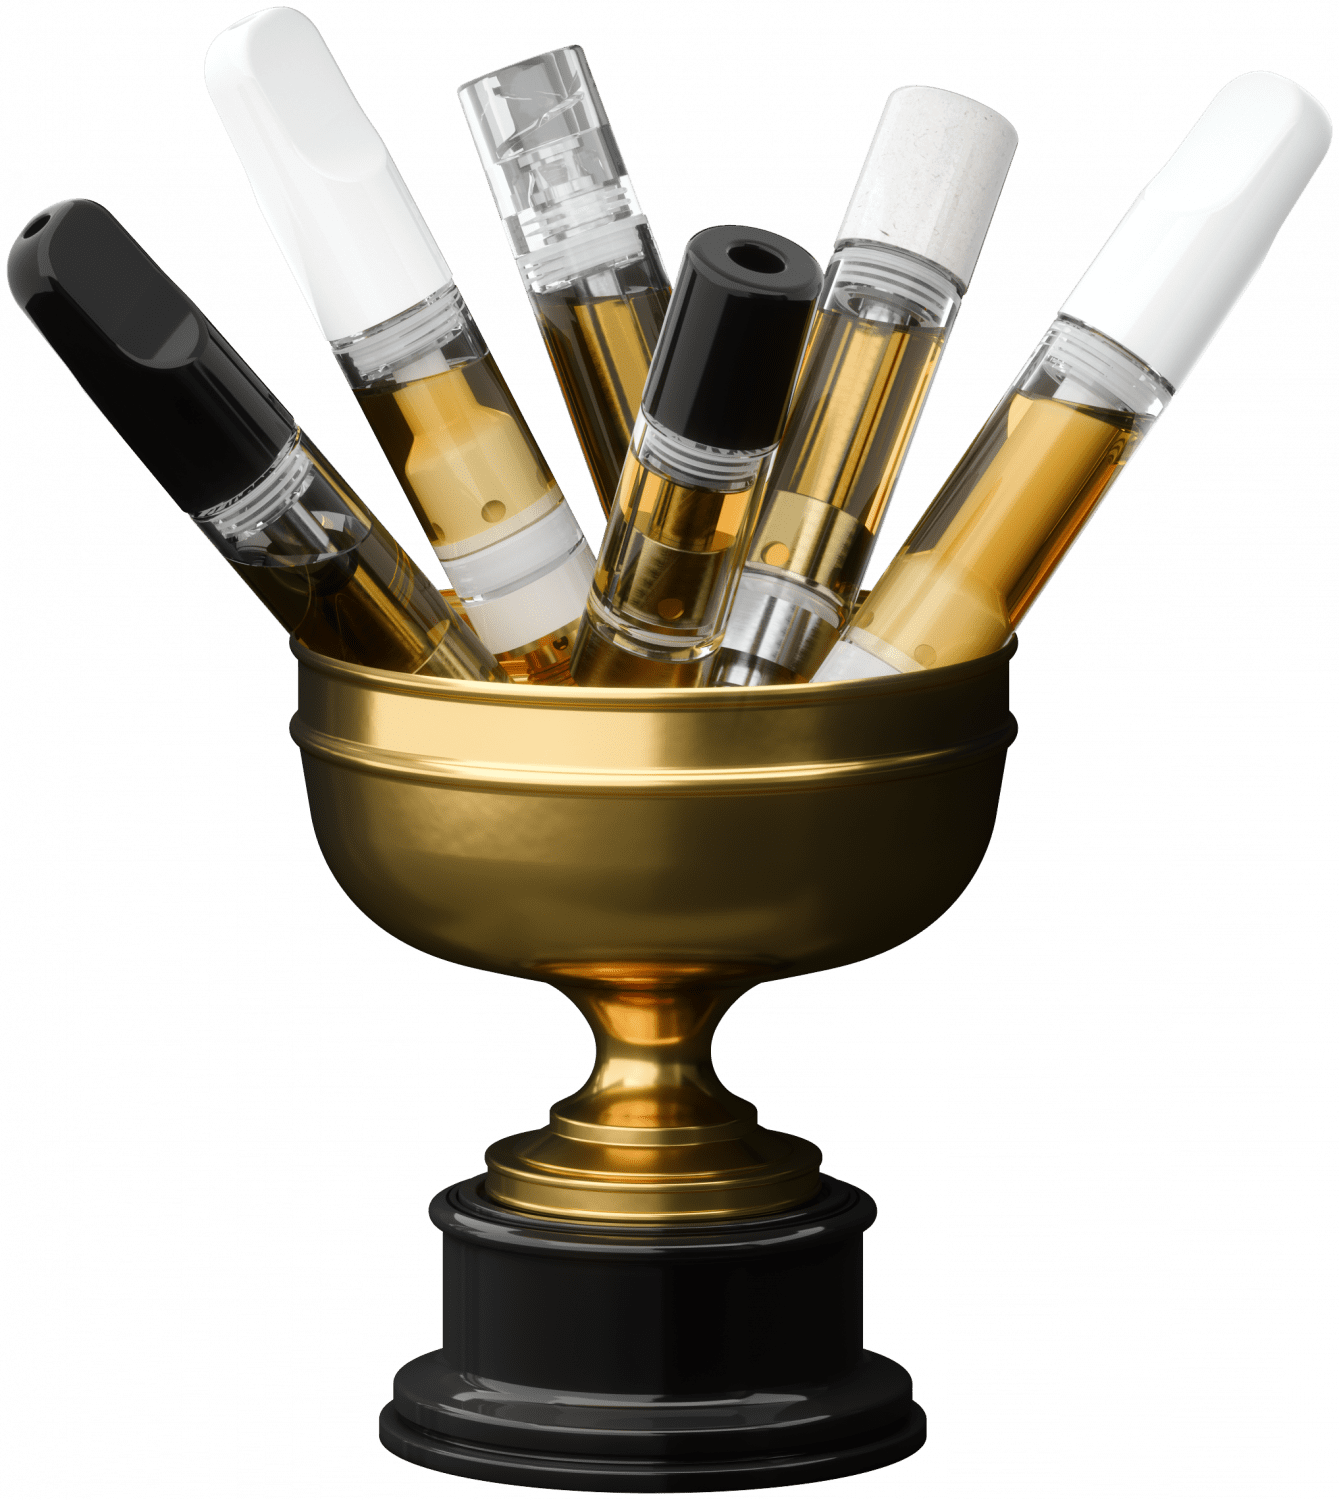 Award Trophy filled with AVD Cannabis Vape hardware - Cannabis Vape Cartridges